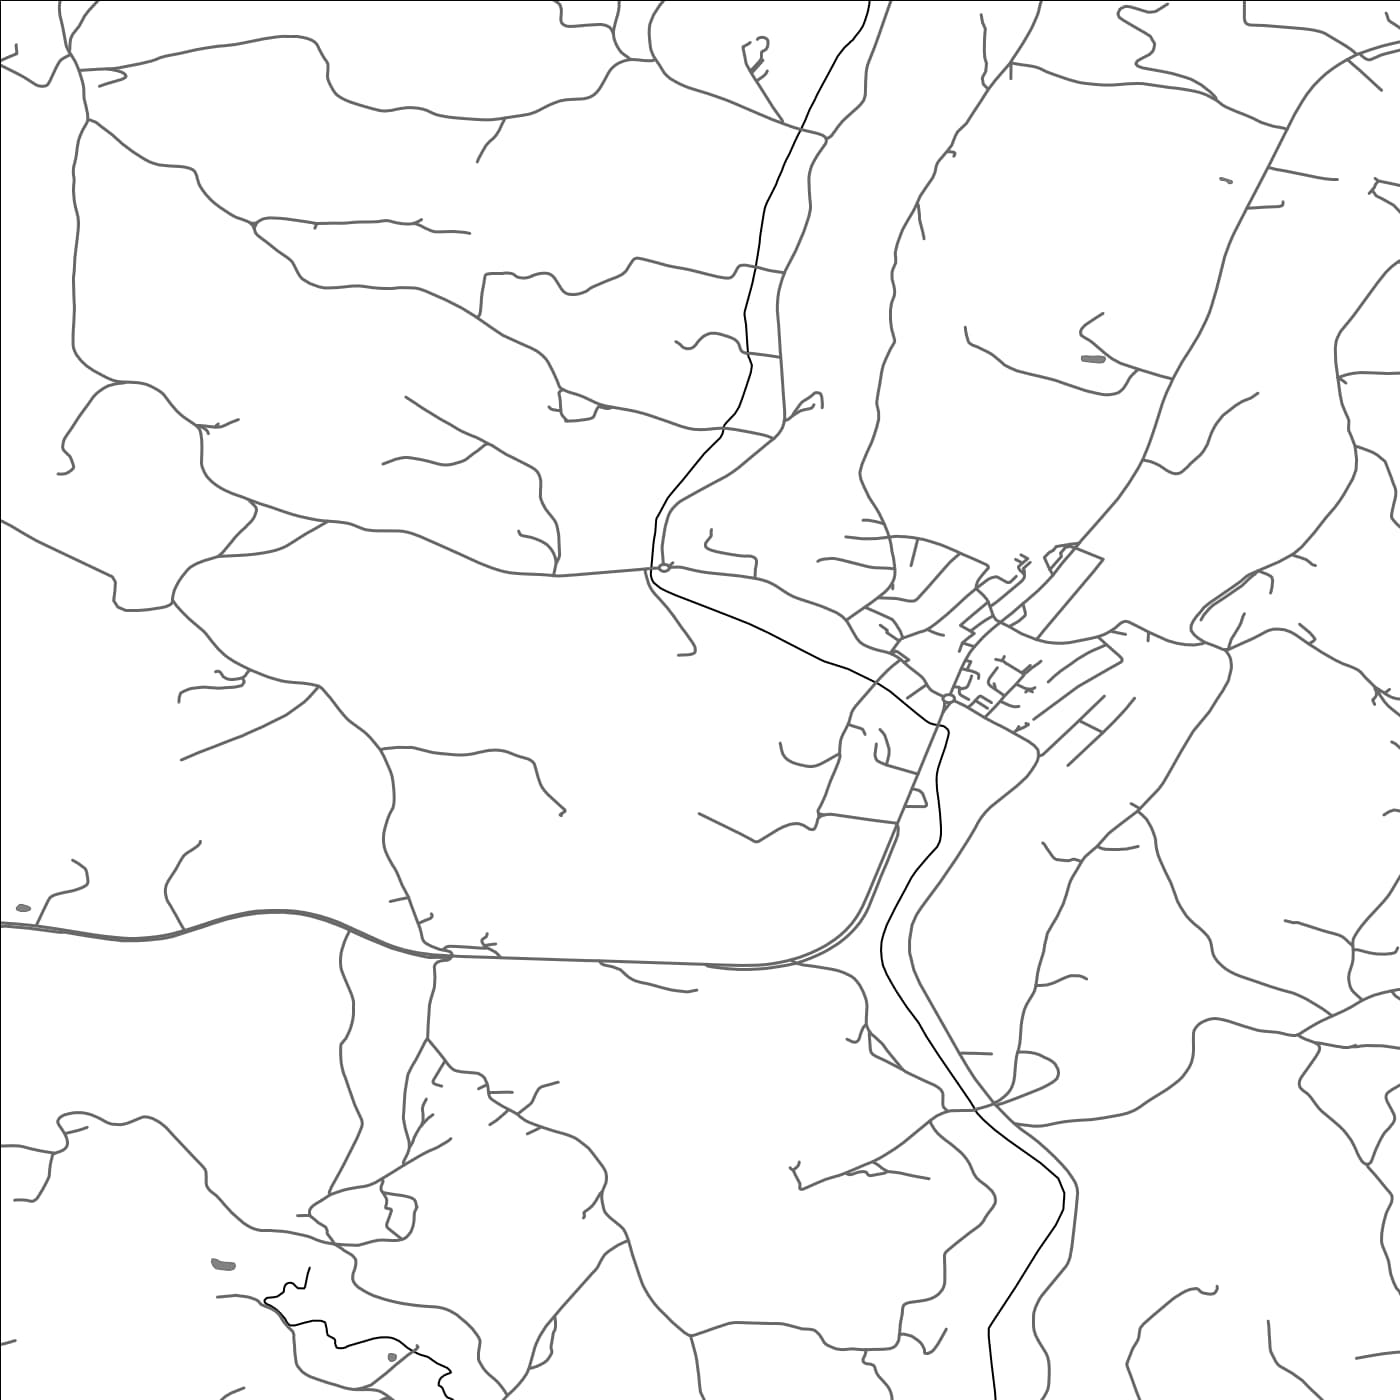 ROAD MAP OF BENEDIKT, SLOVENIA BY MAPBAKES